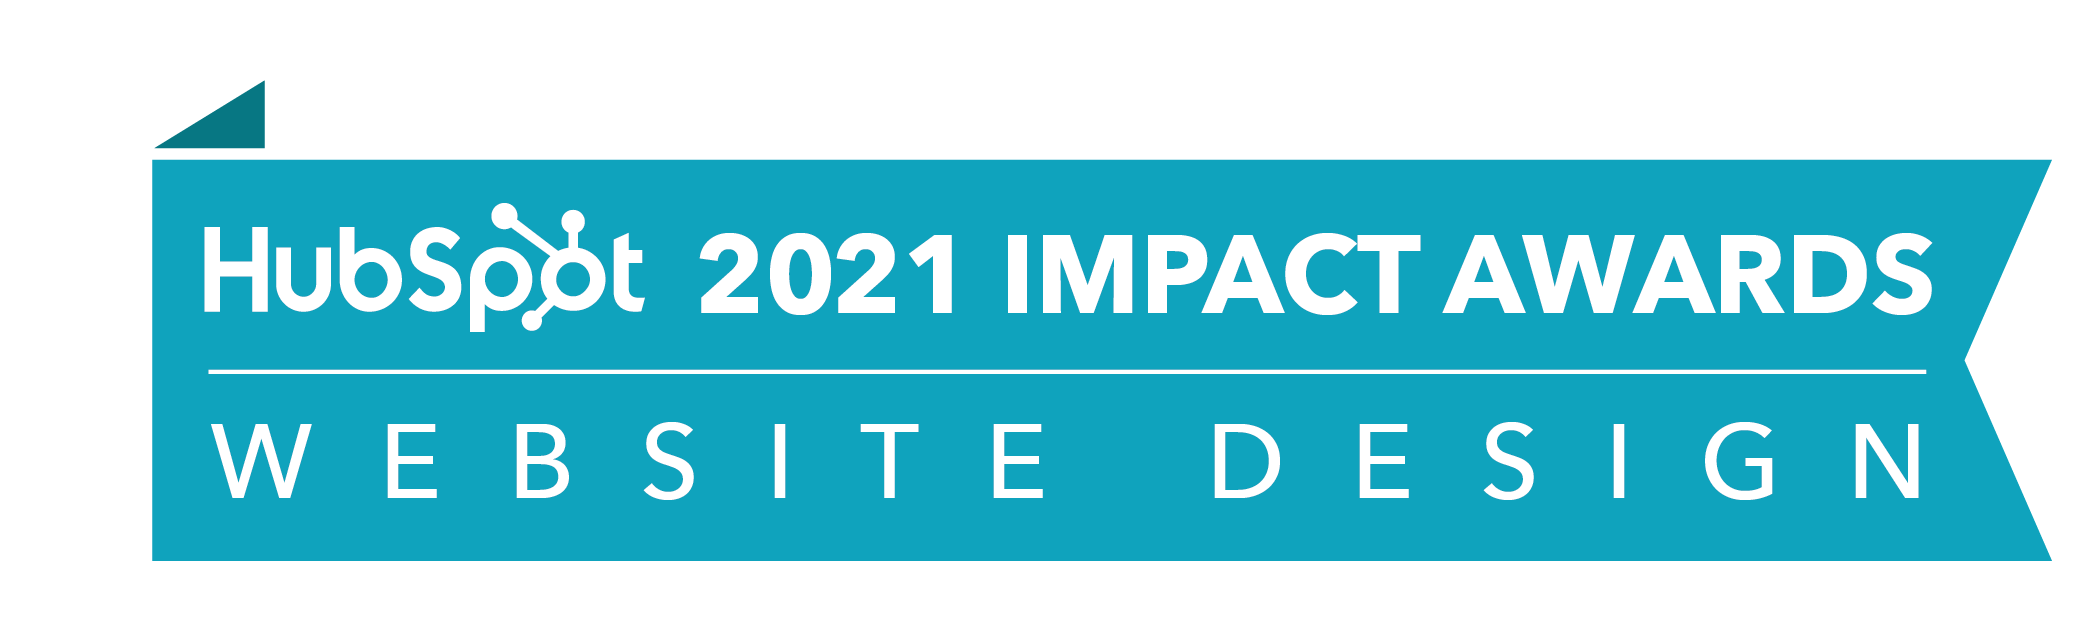 HubSpot_ImpactAwards_2021_WebsiteDesign2-3